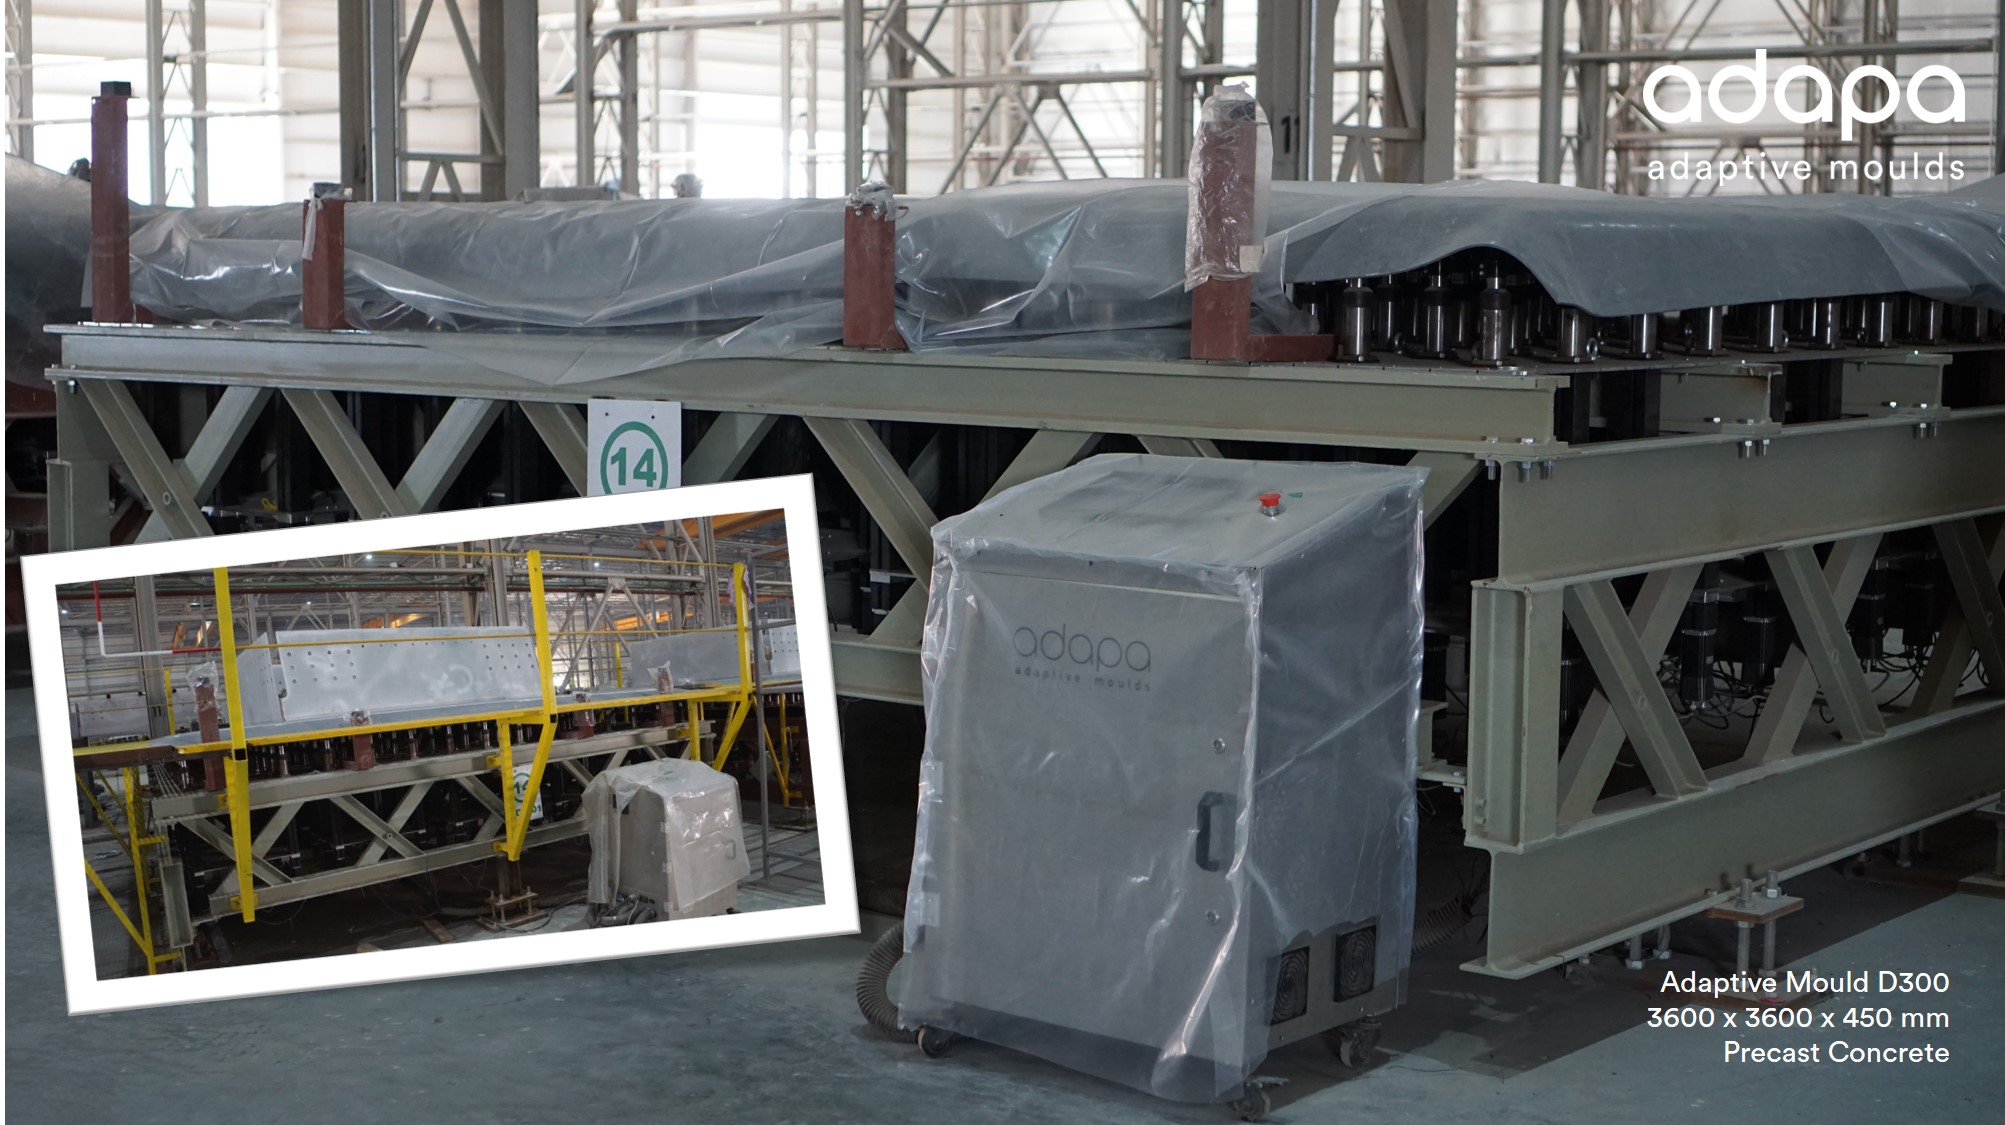 Adaptive Mould D300 – Precast Concrete